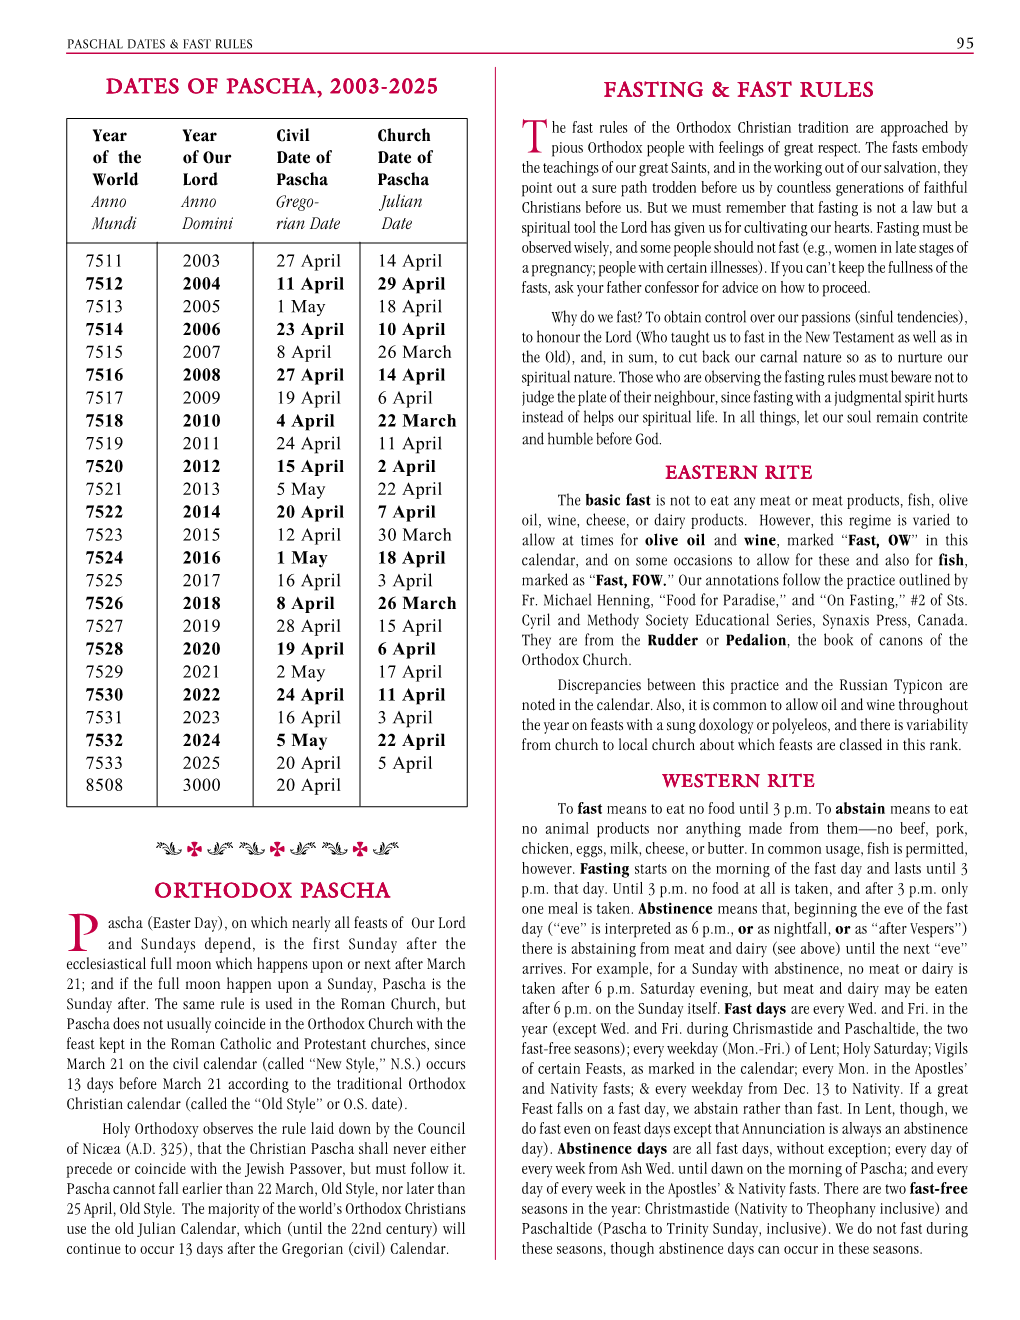 Alphabetical Index of Saints’ Names